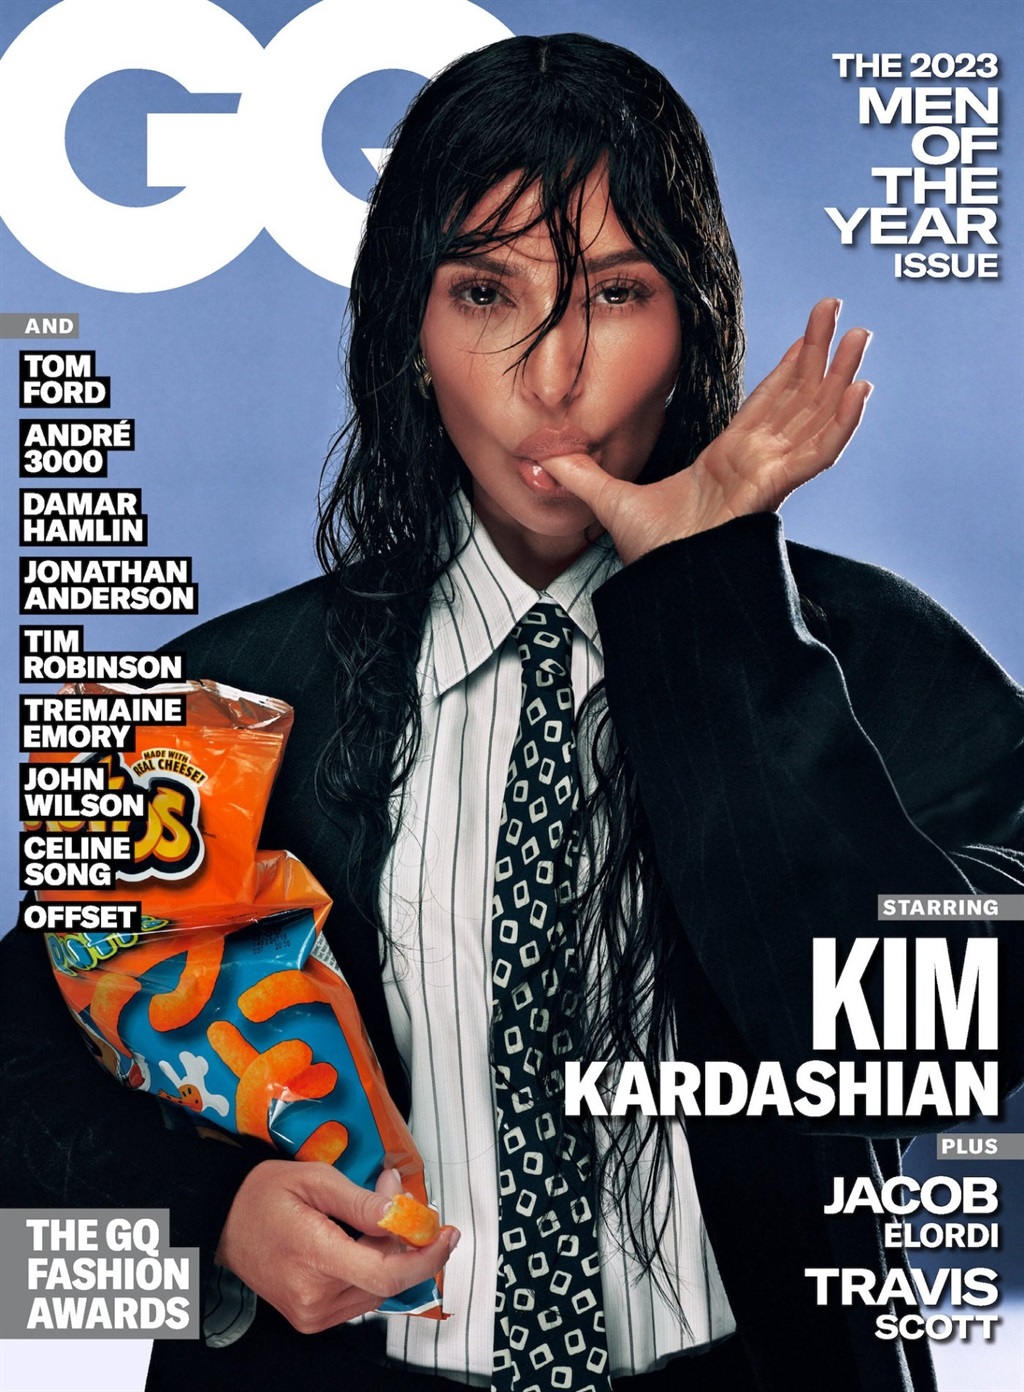 Kim Kardashian breaks social boundaries and becomes GQ's Man of the Year.
Photo: Jack Bridgland/GQ